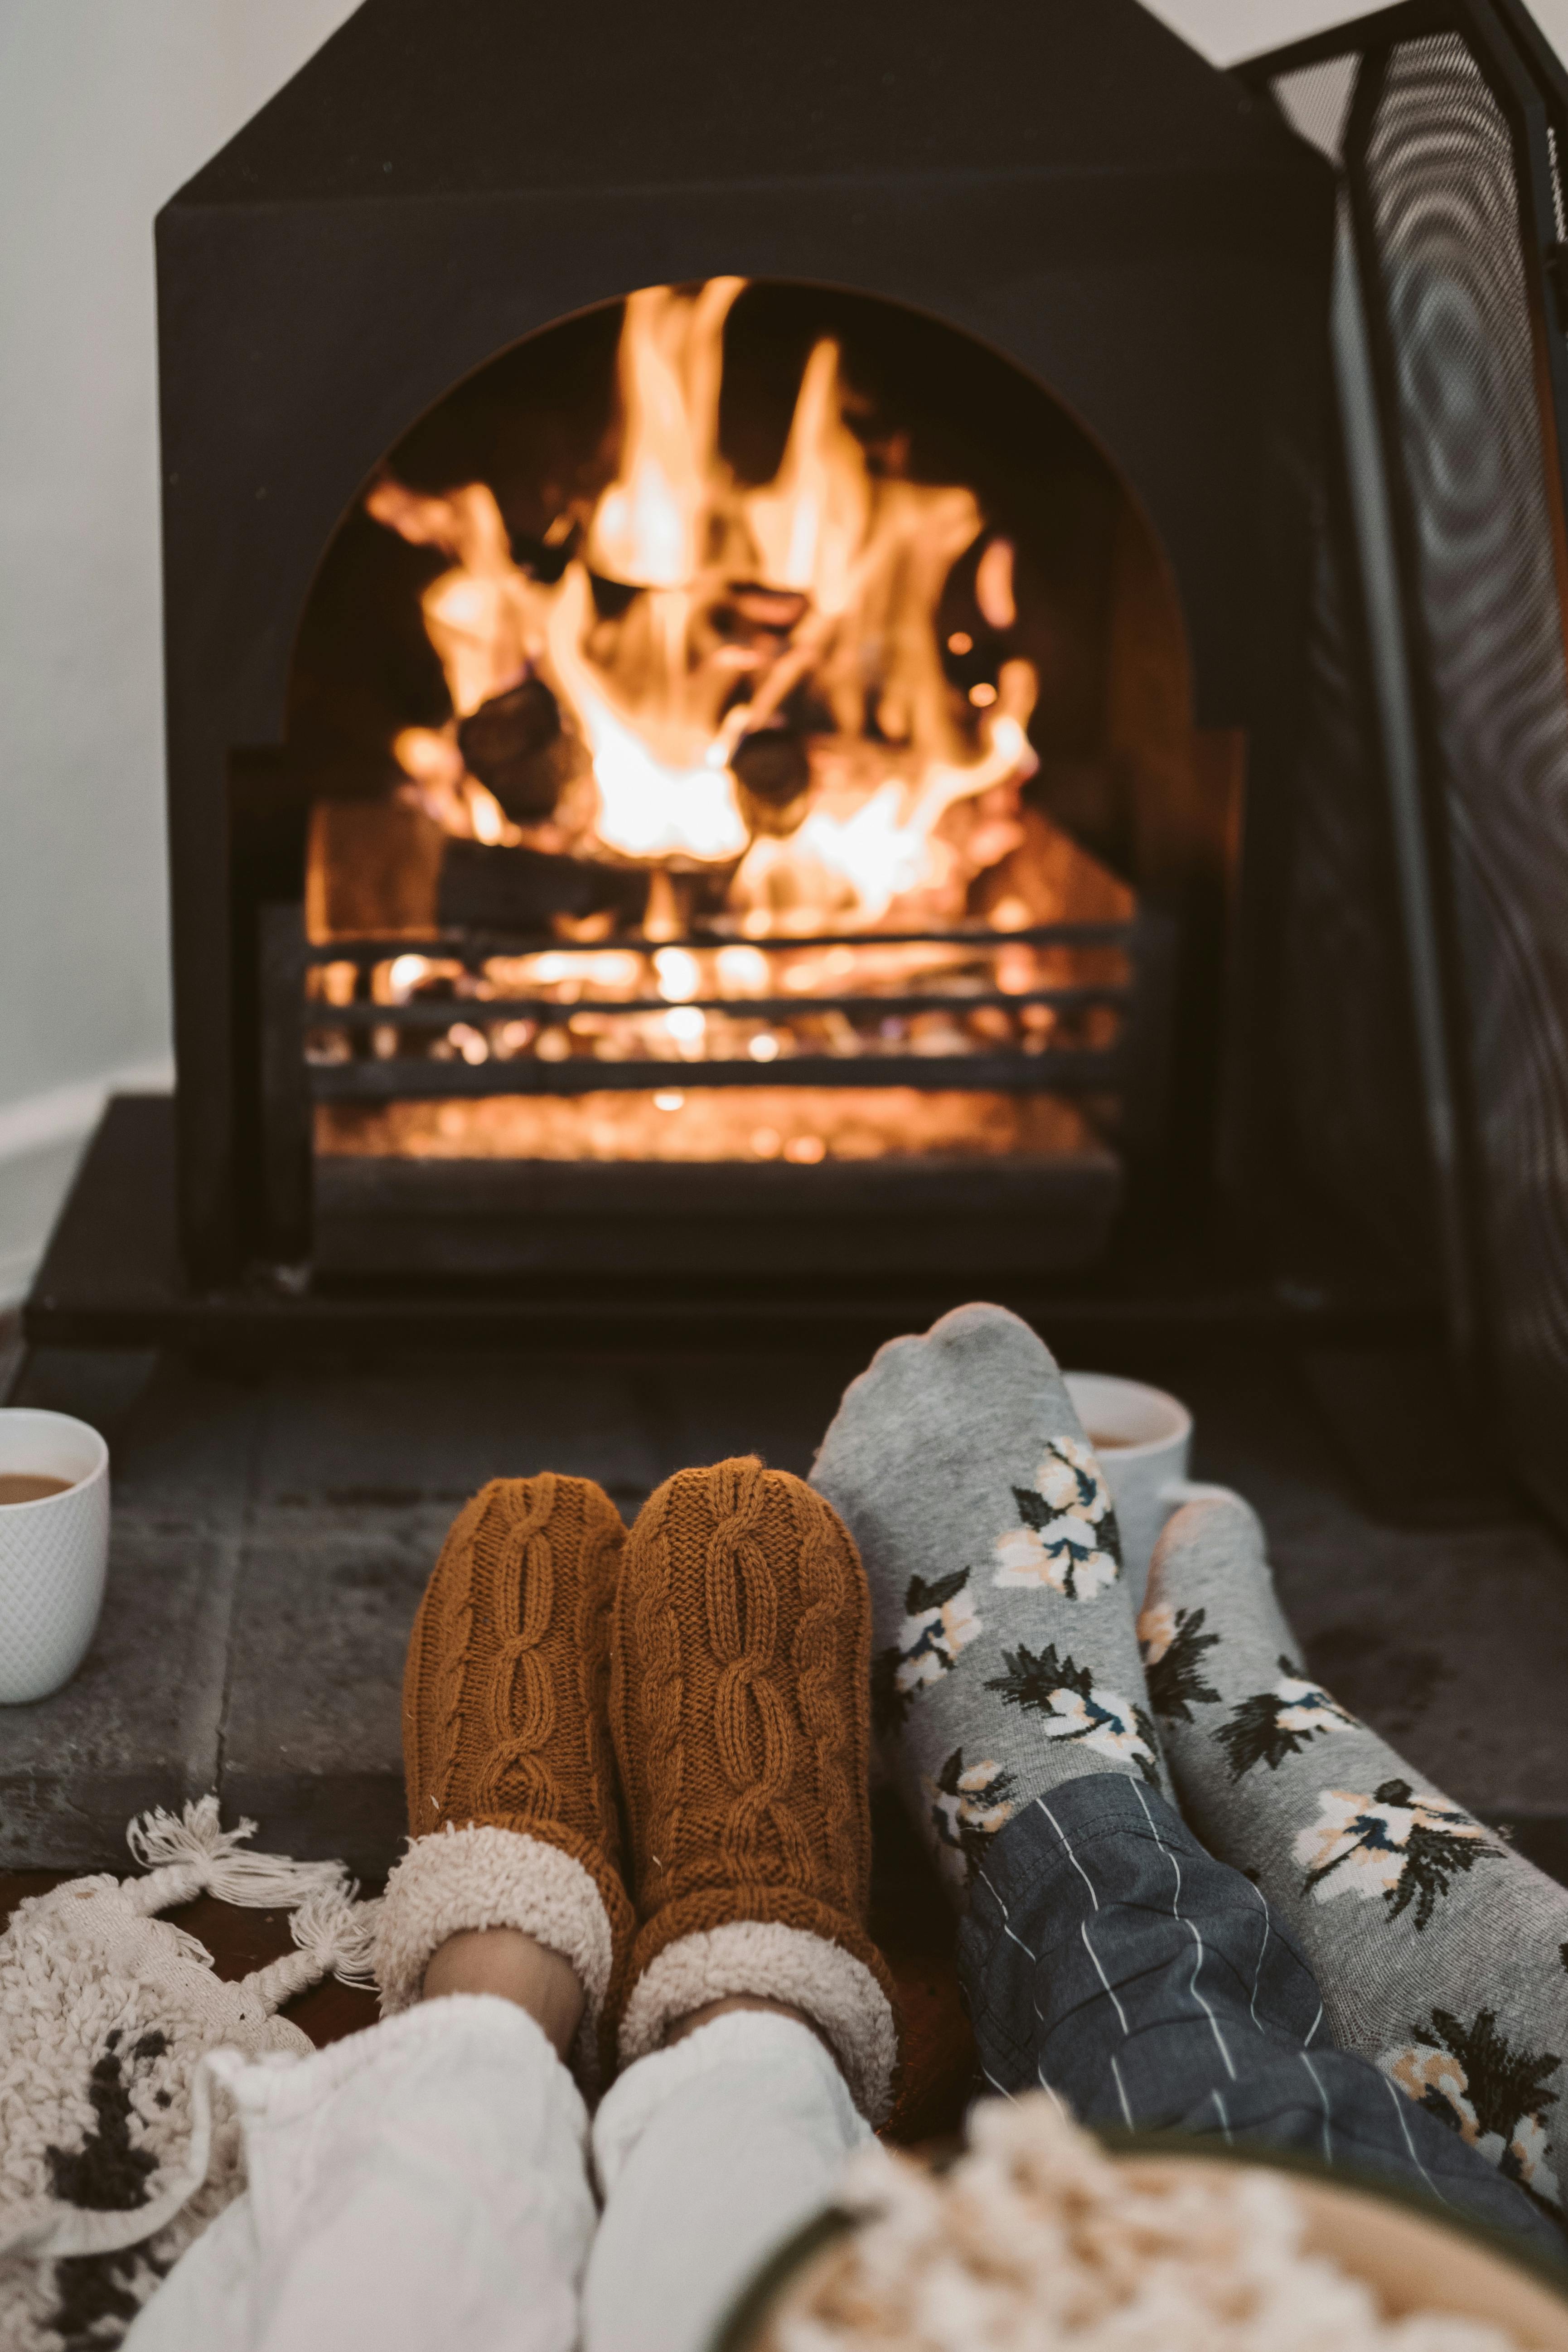 Cozy Winter Photos, Download The BEST Free Cozy Winter Stock